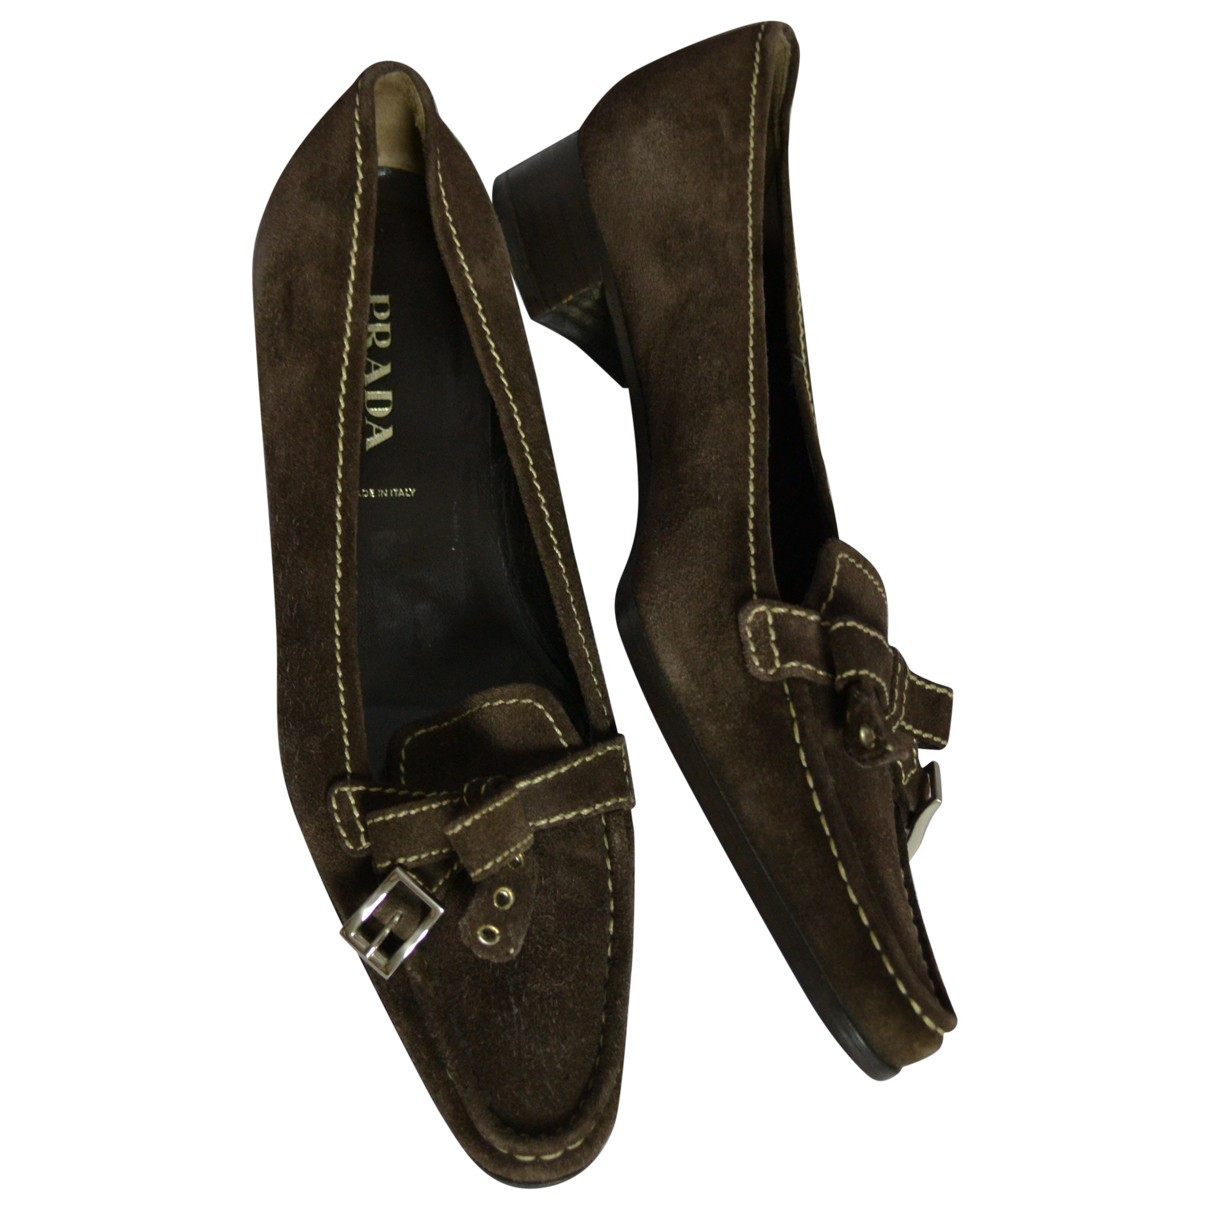 shoes Prada mules & clogs for Female Suede 37.5 EU. Used condition